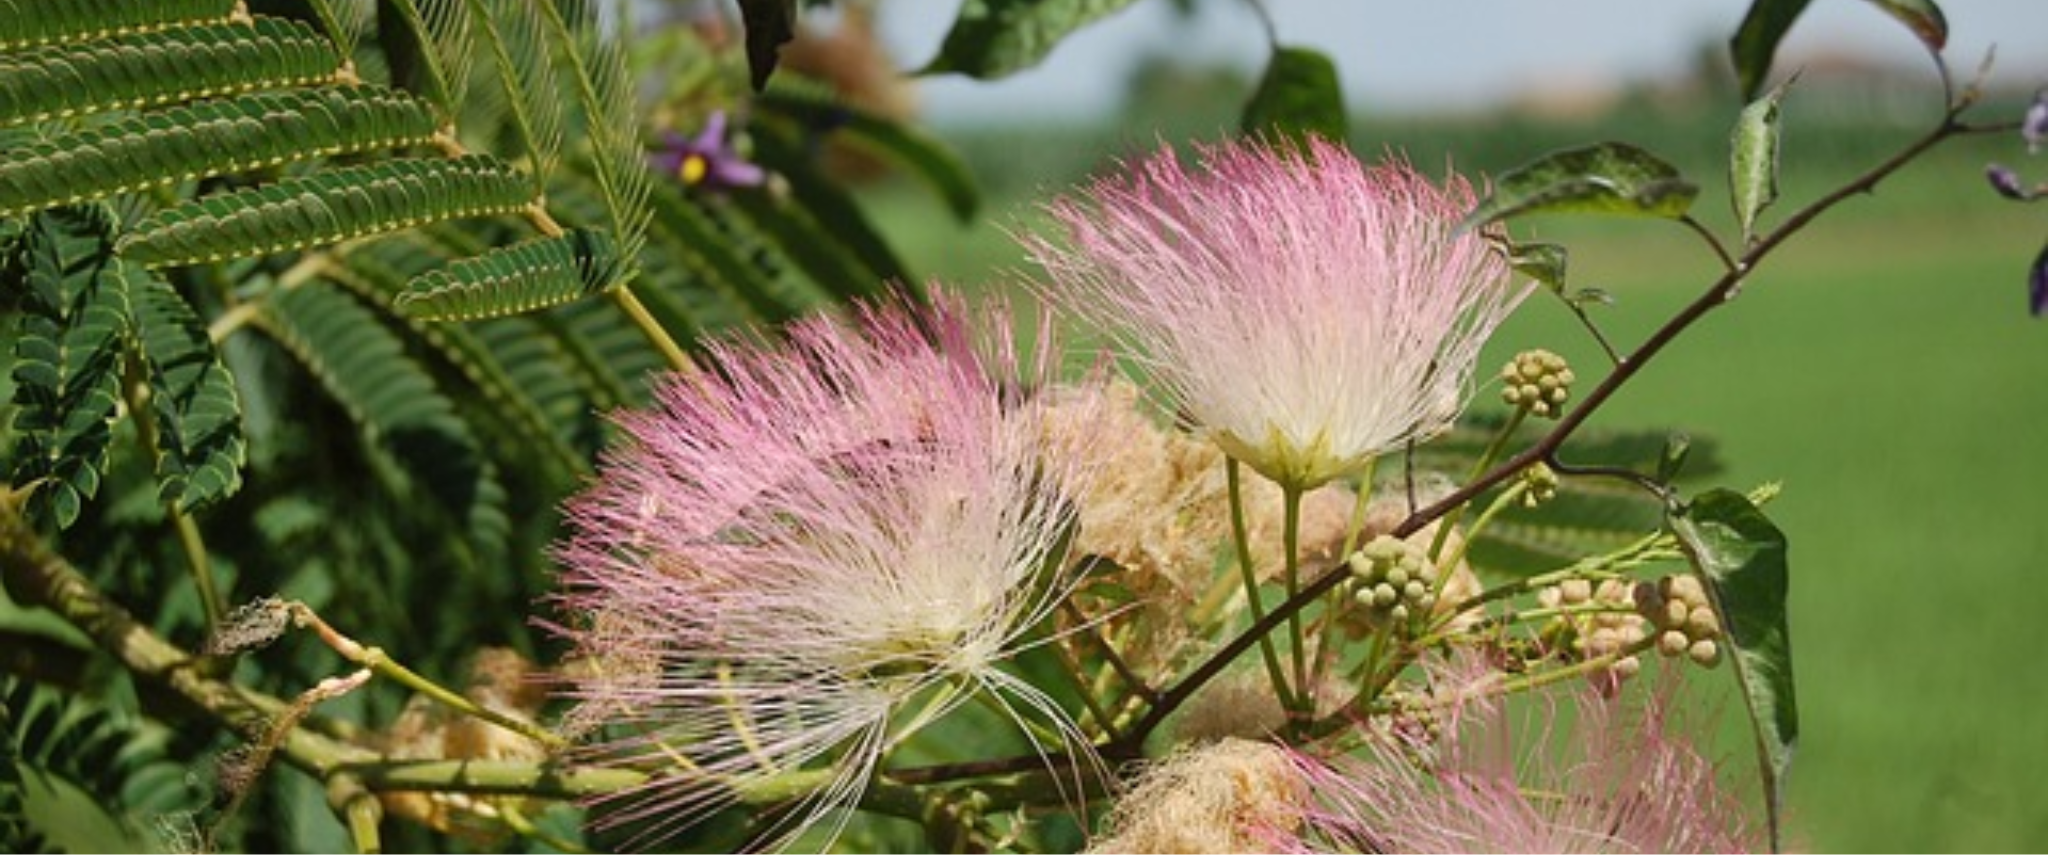 fleur albizia arbre